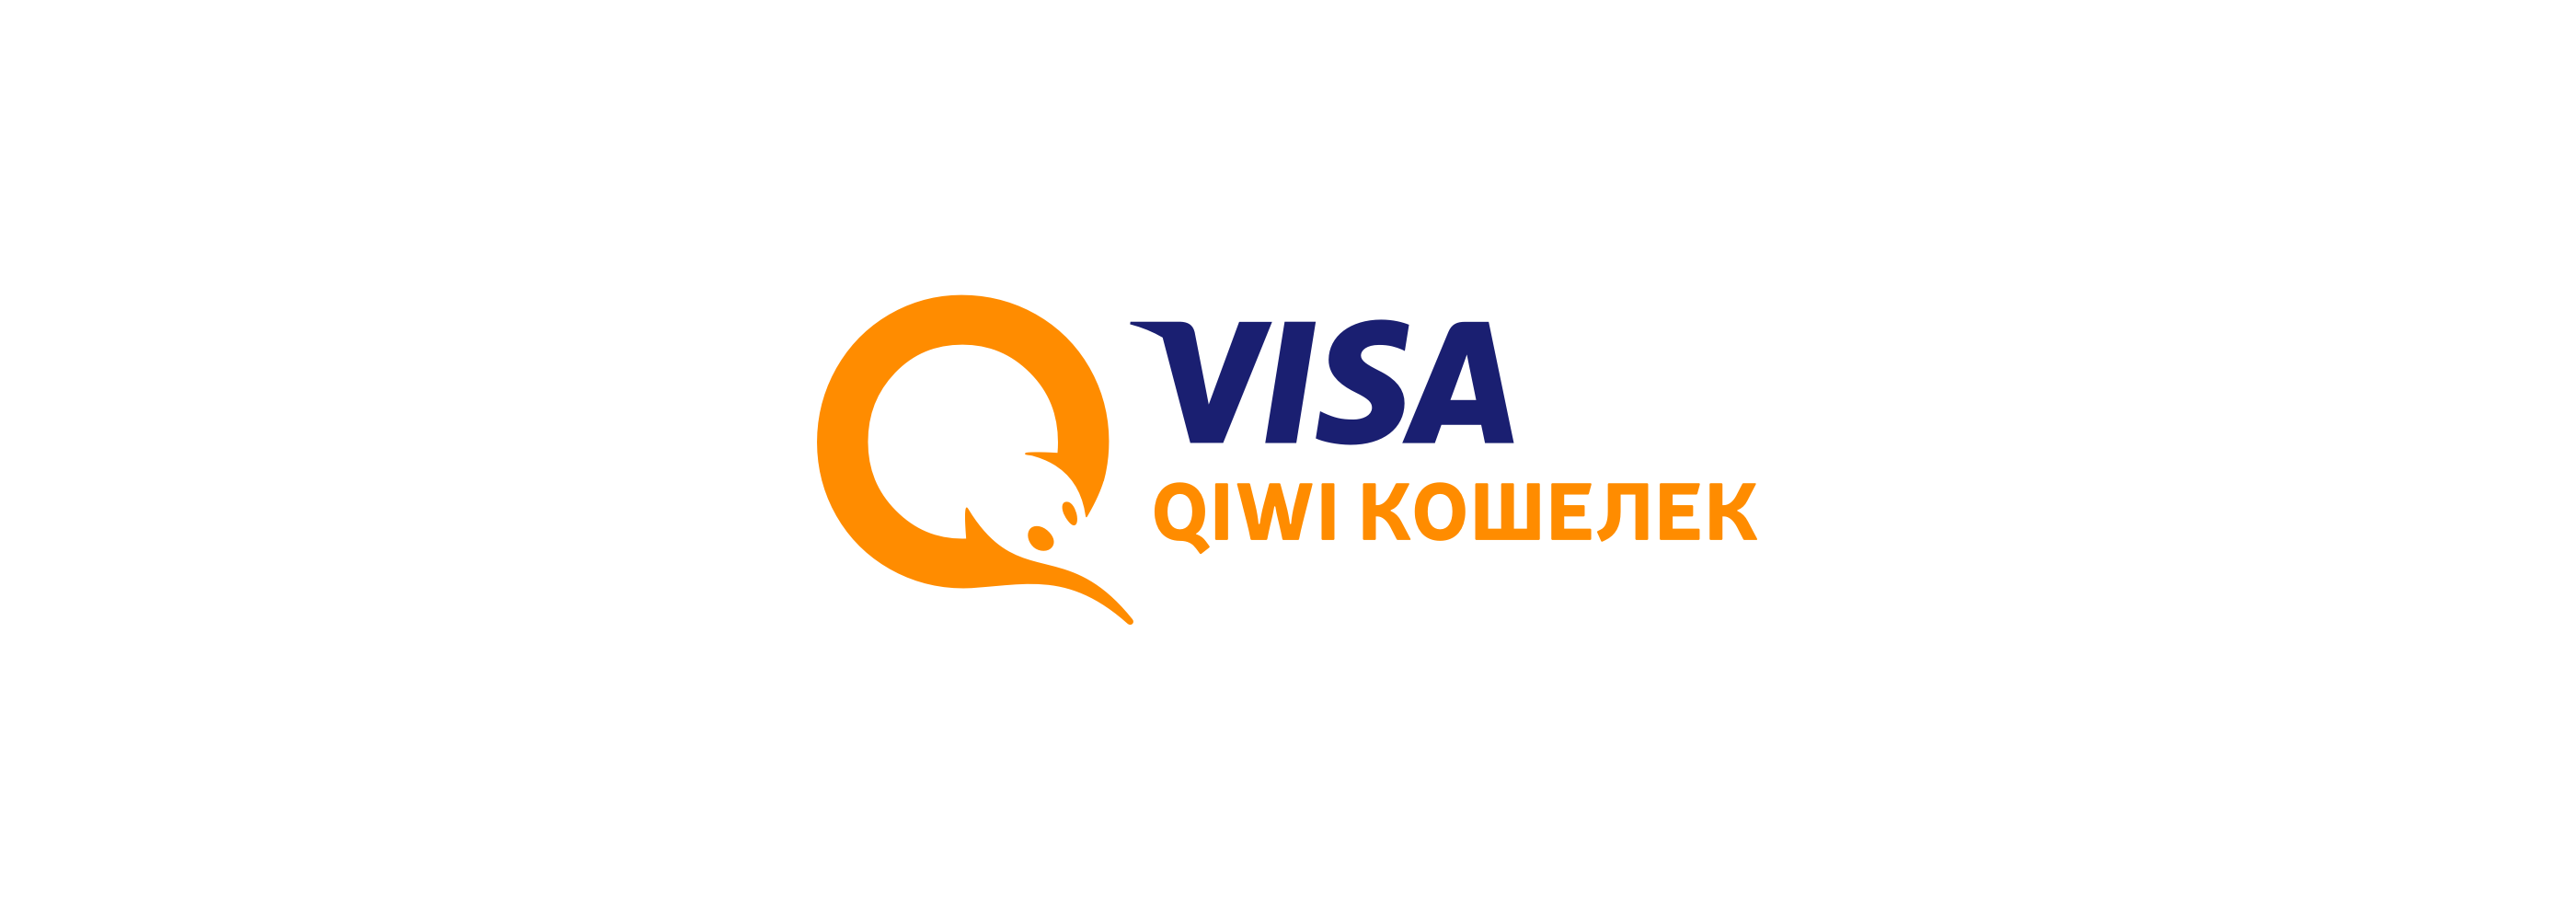 Qiwi plays. Киви кошелек. Платежная система QIWI. QIWI Wallet логотип. Ярлык киви кошелек.